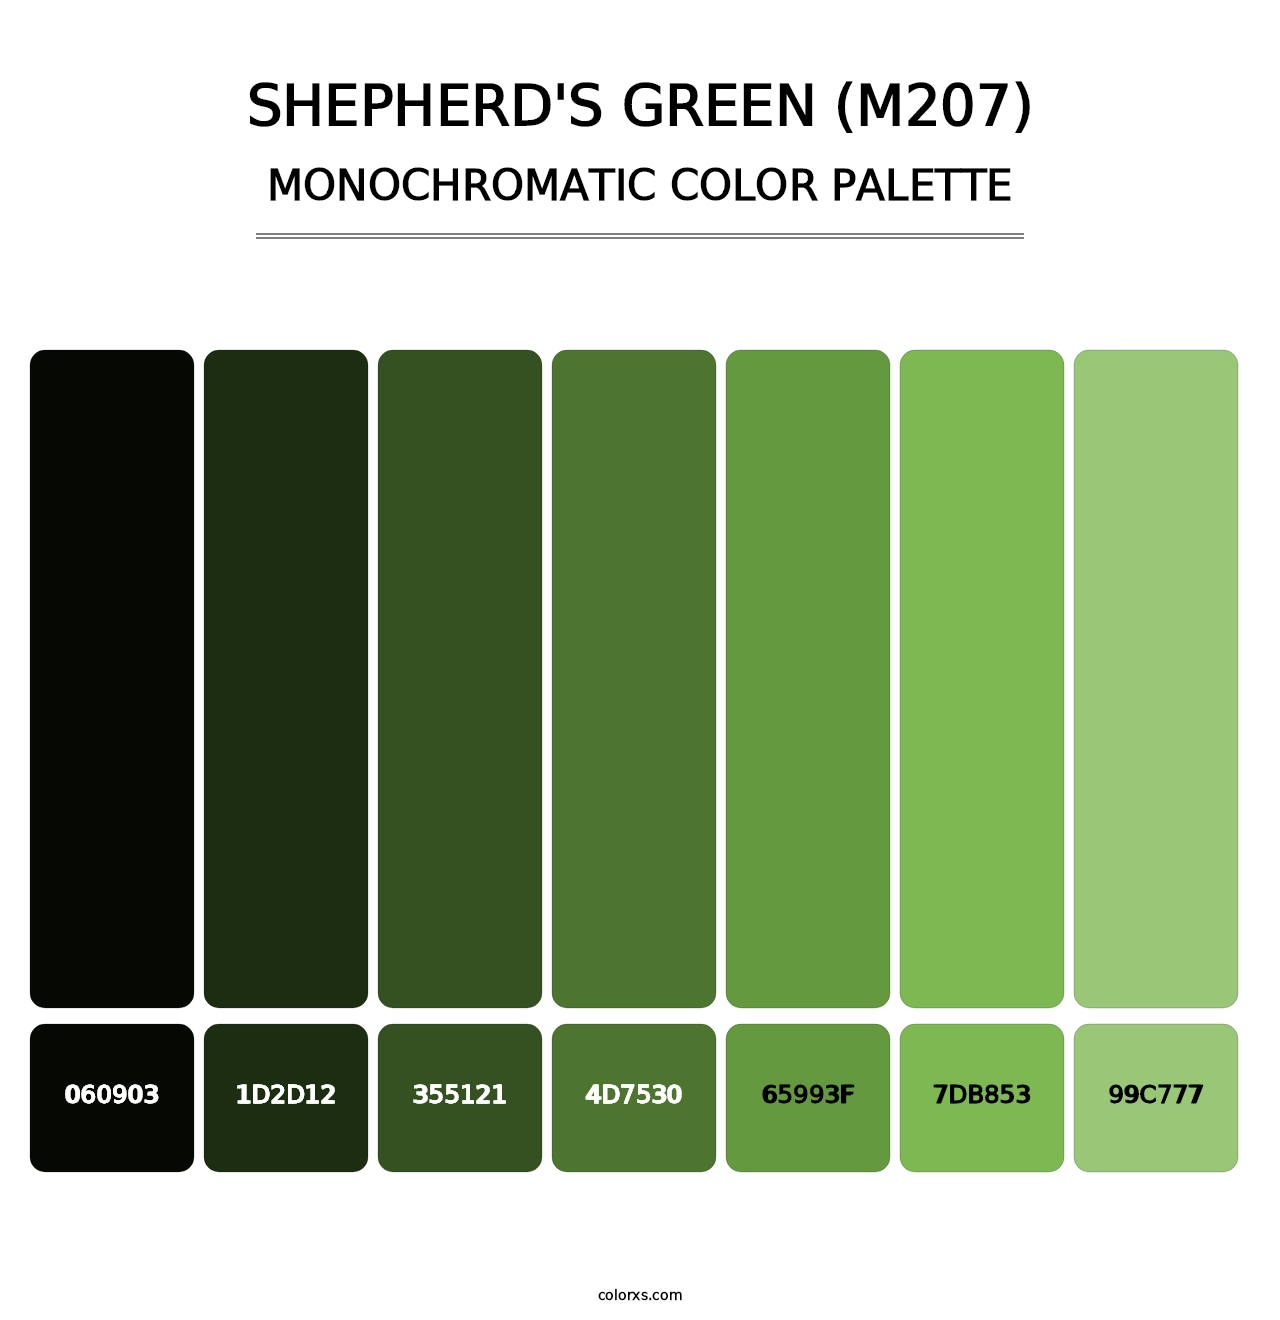 Shepherd's Green (M207) - Monochromatic Color Palette